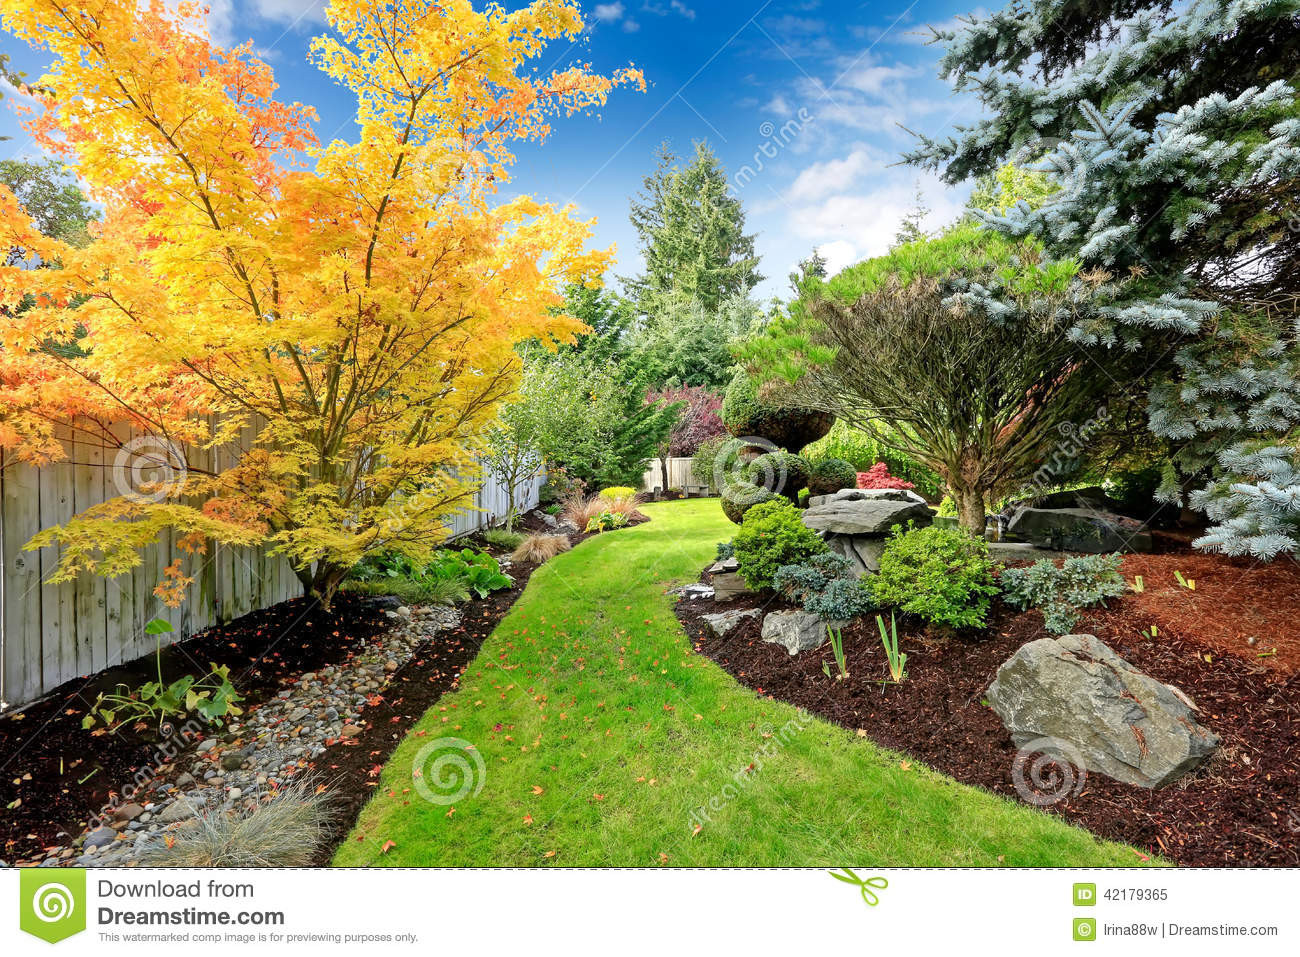 Best ideas about Backyard Landscape Designs
. Save or Pin Backyard Landscape Design Tropical Theme Stock Image Now.